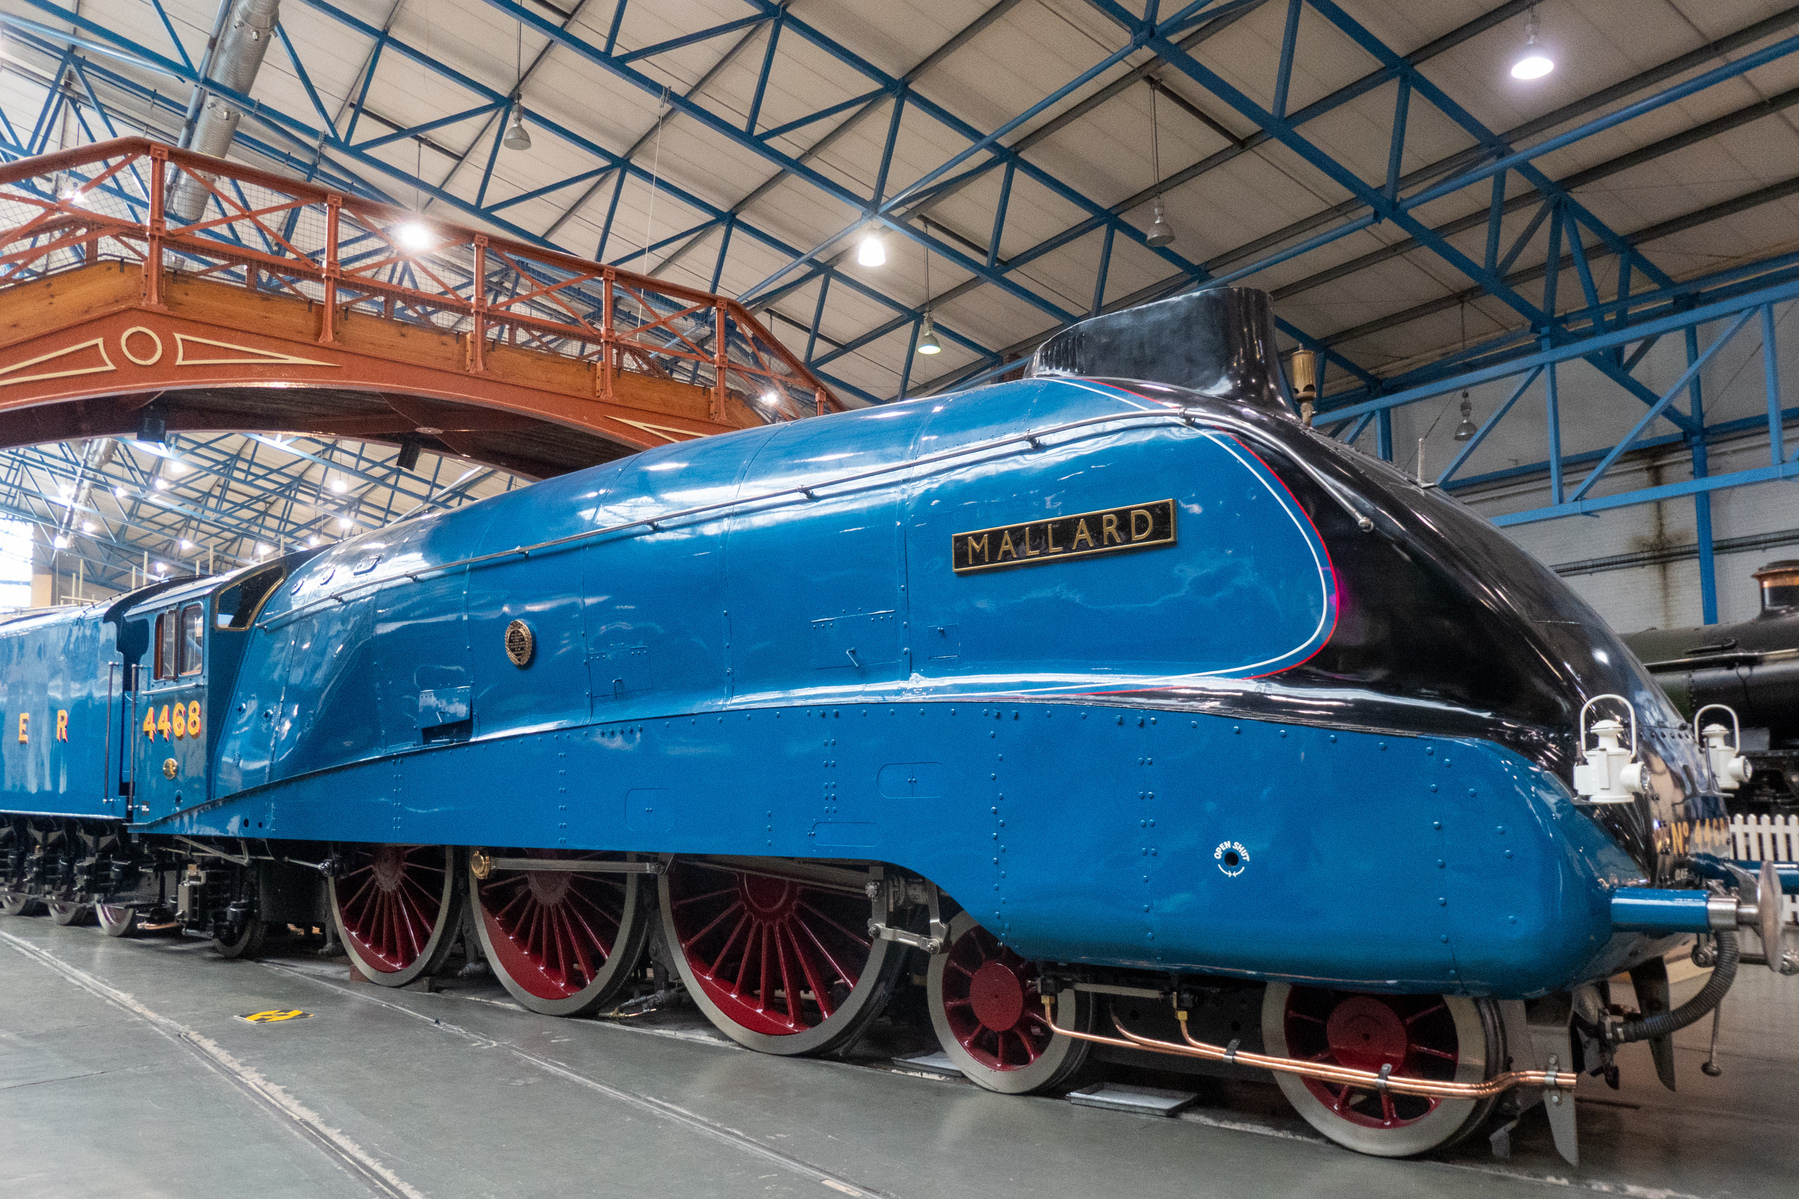 The Mallard - a blue steam locomotive built in 1938